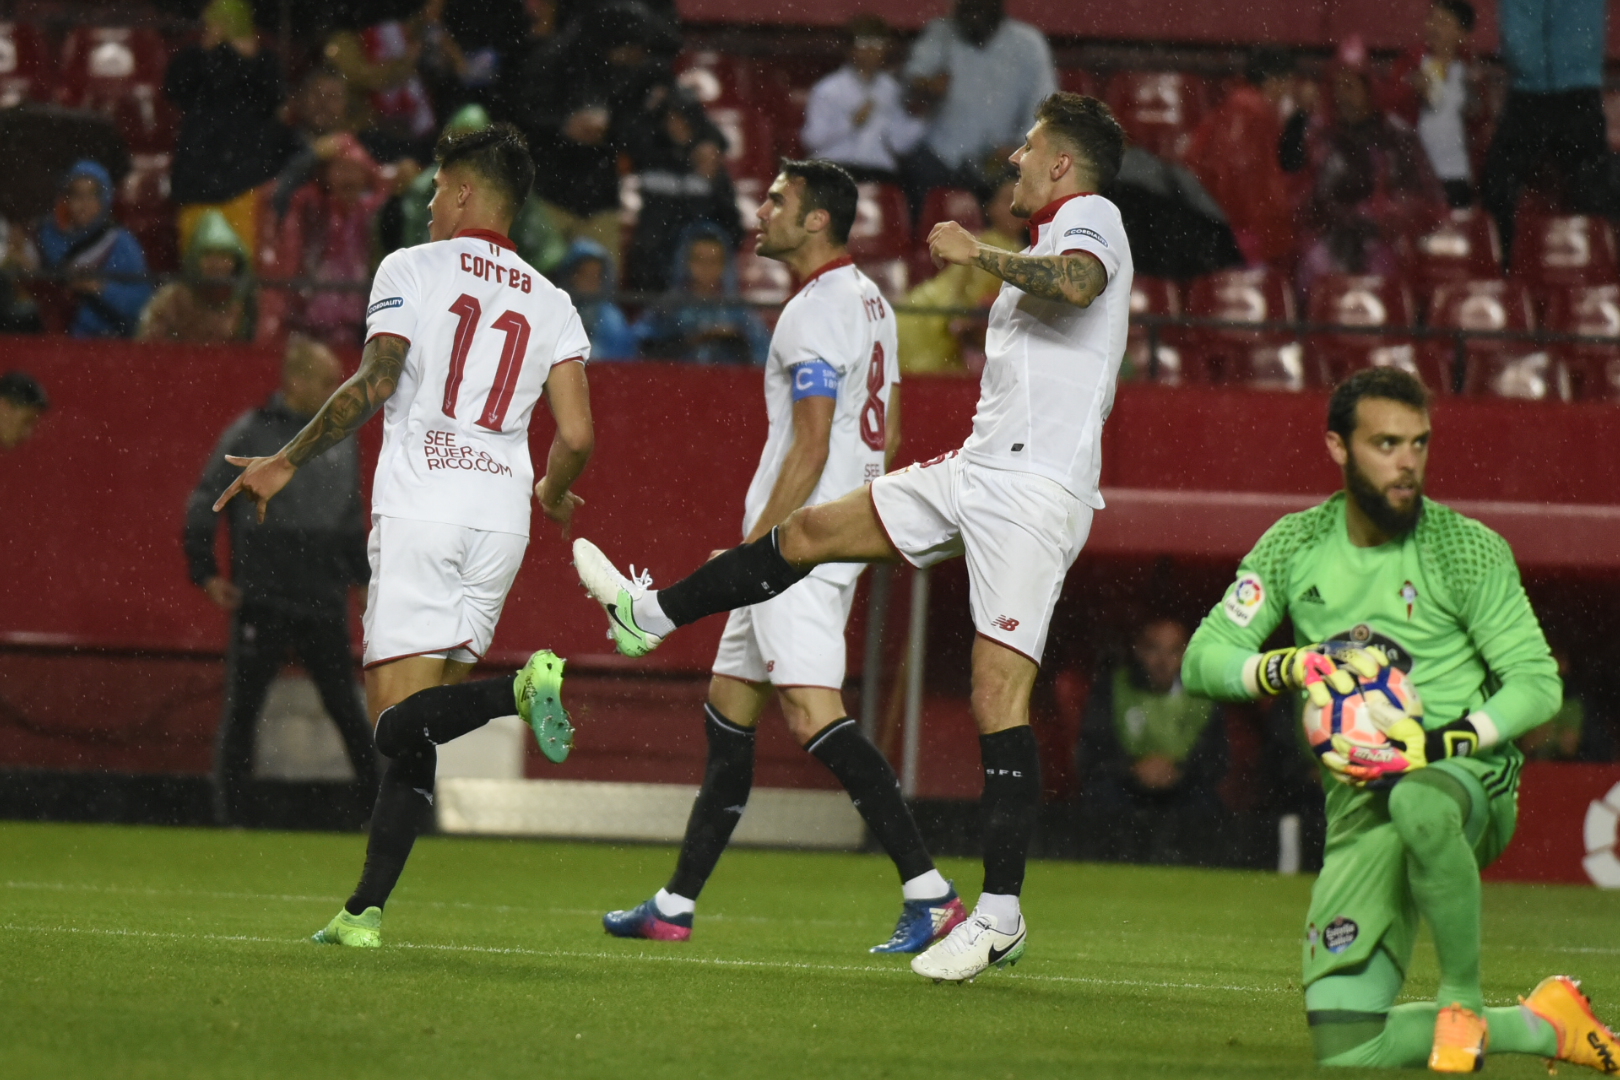 Sevilla FC goal against Celta